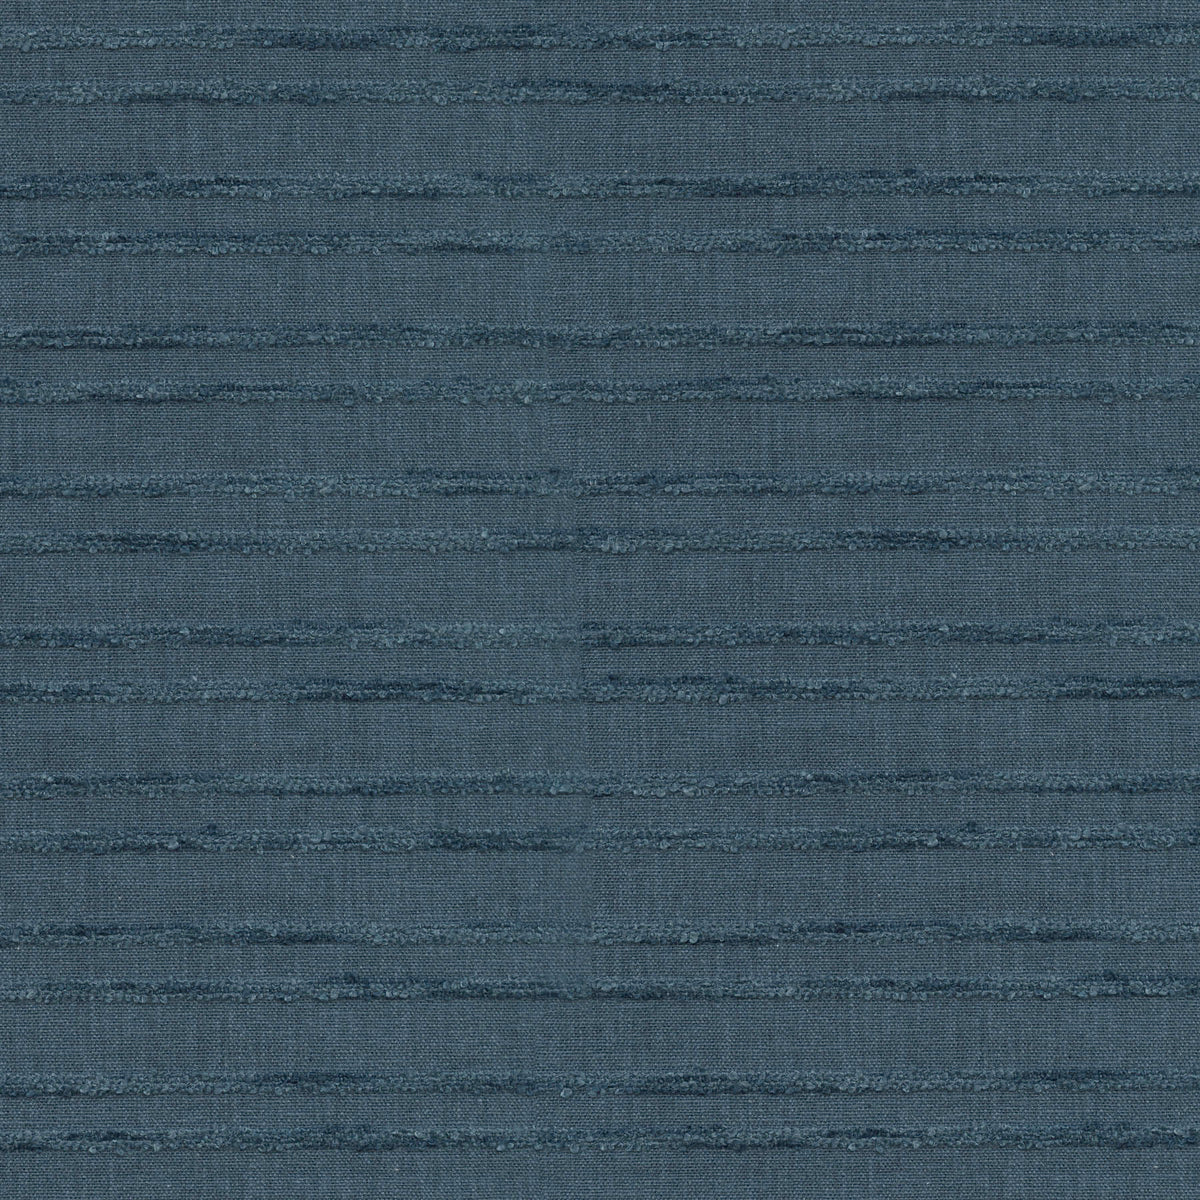 P/K Lifestyles Stanton Stripe - Indigo 470801 Upholstery Fabric